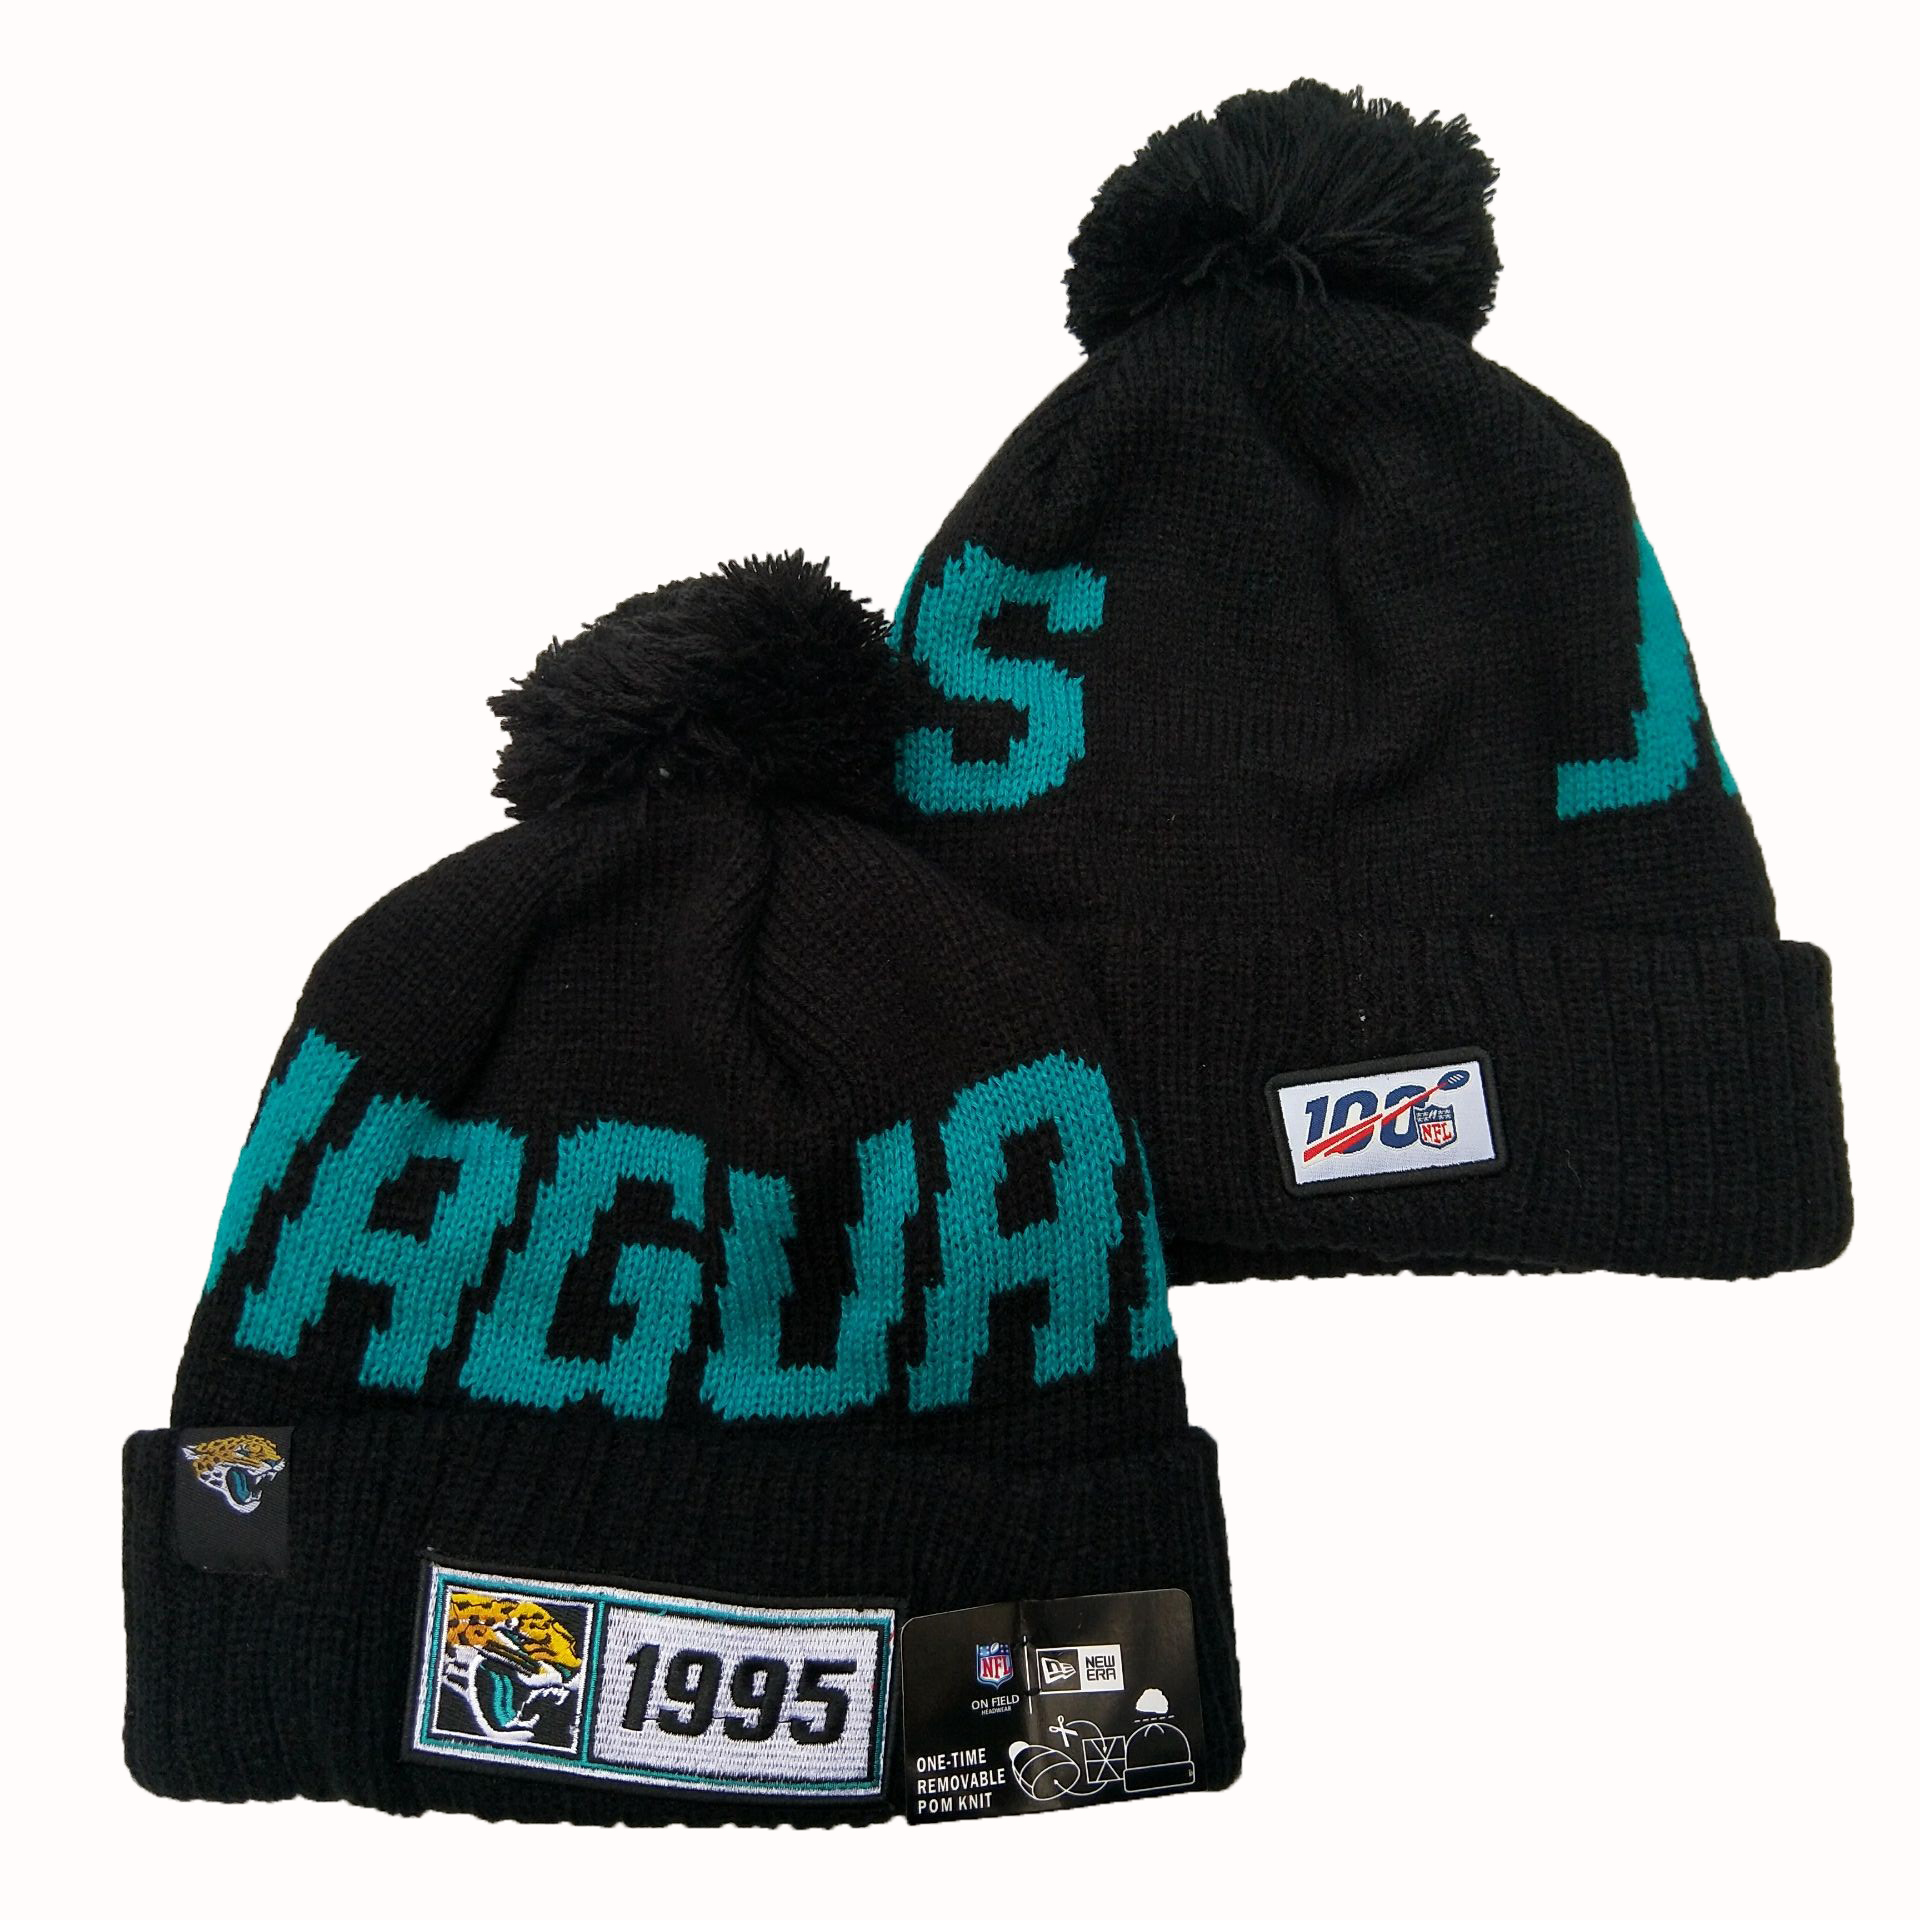 NFL Jacksonville Jaguars Stitched Snapback Hats 016